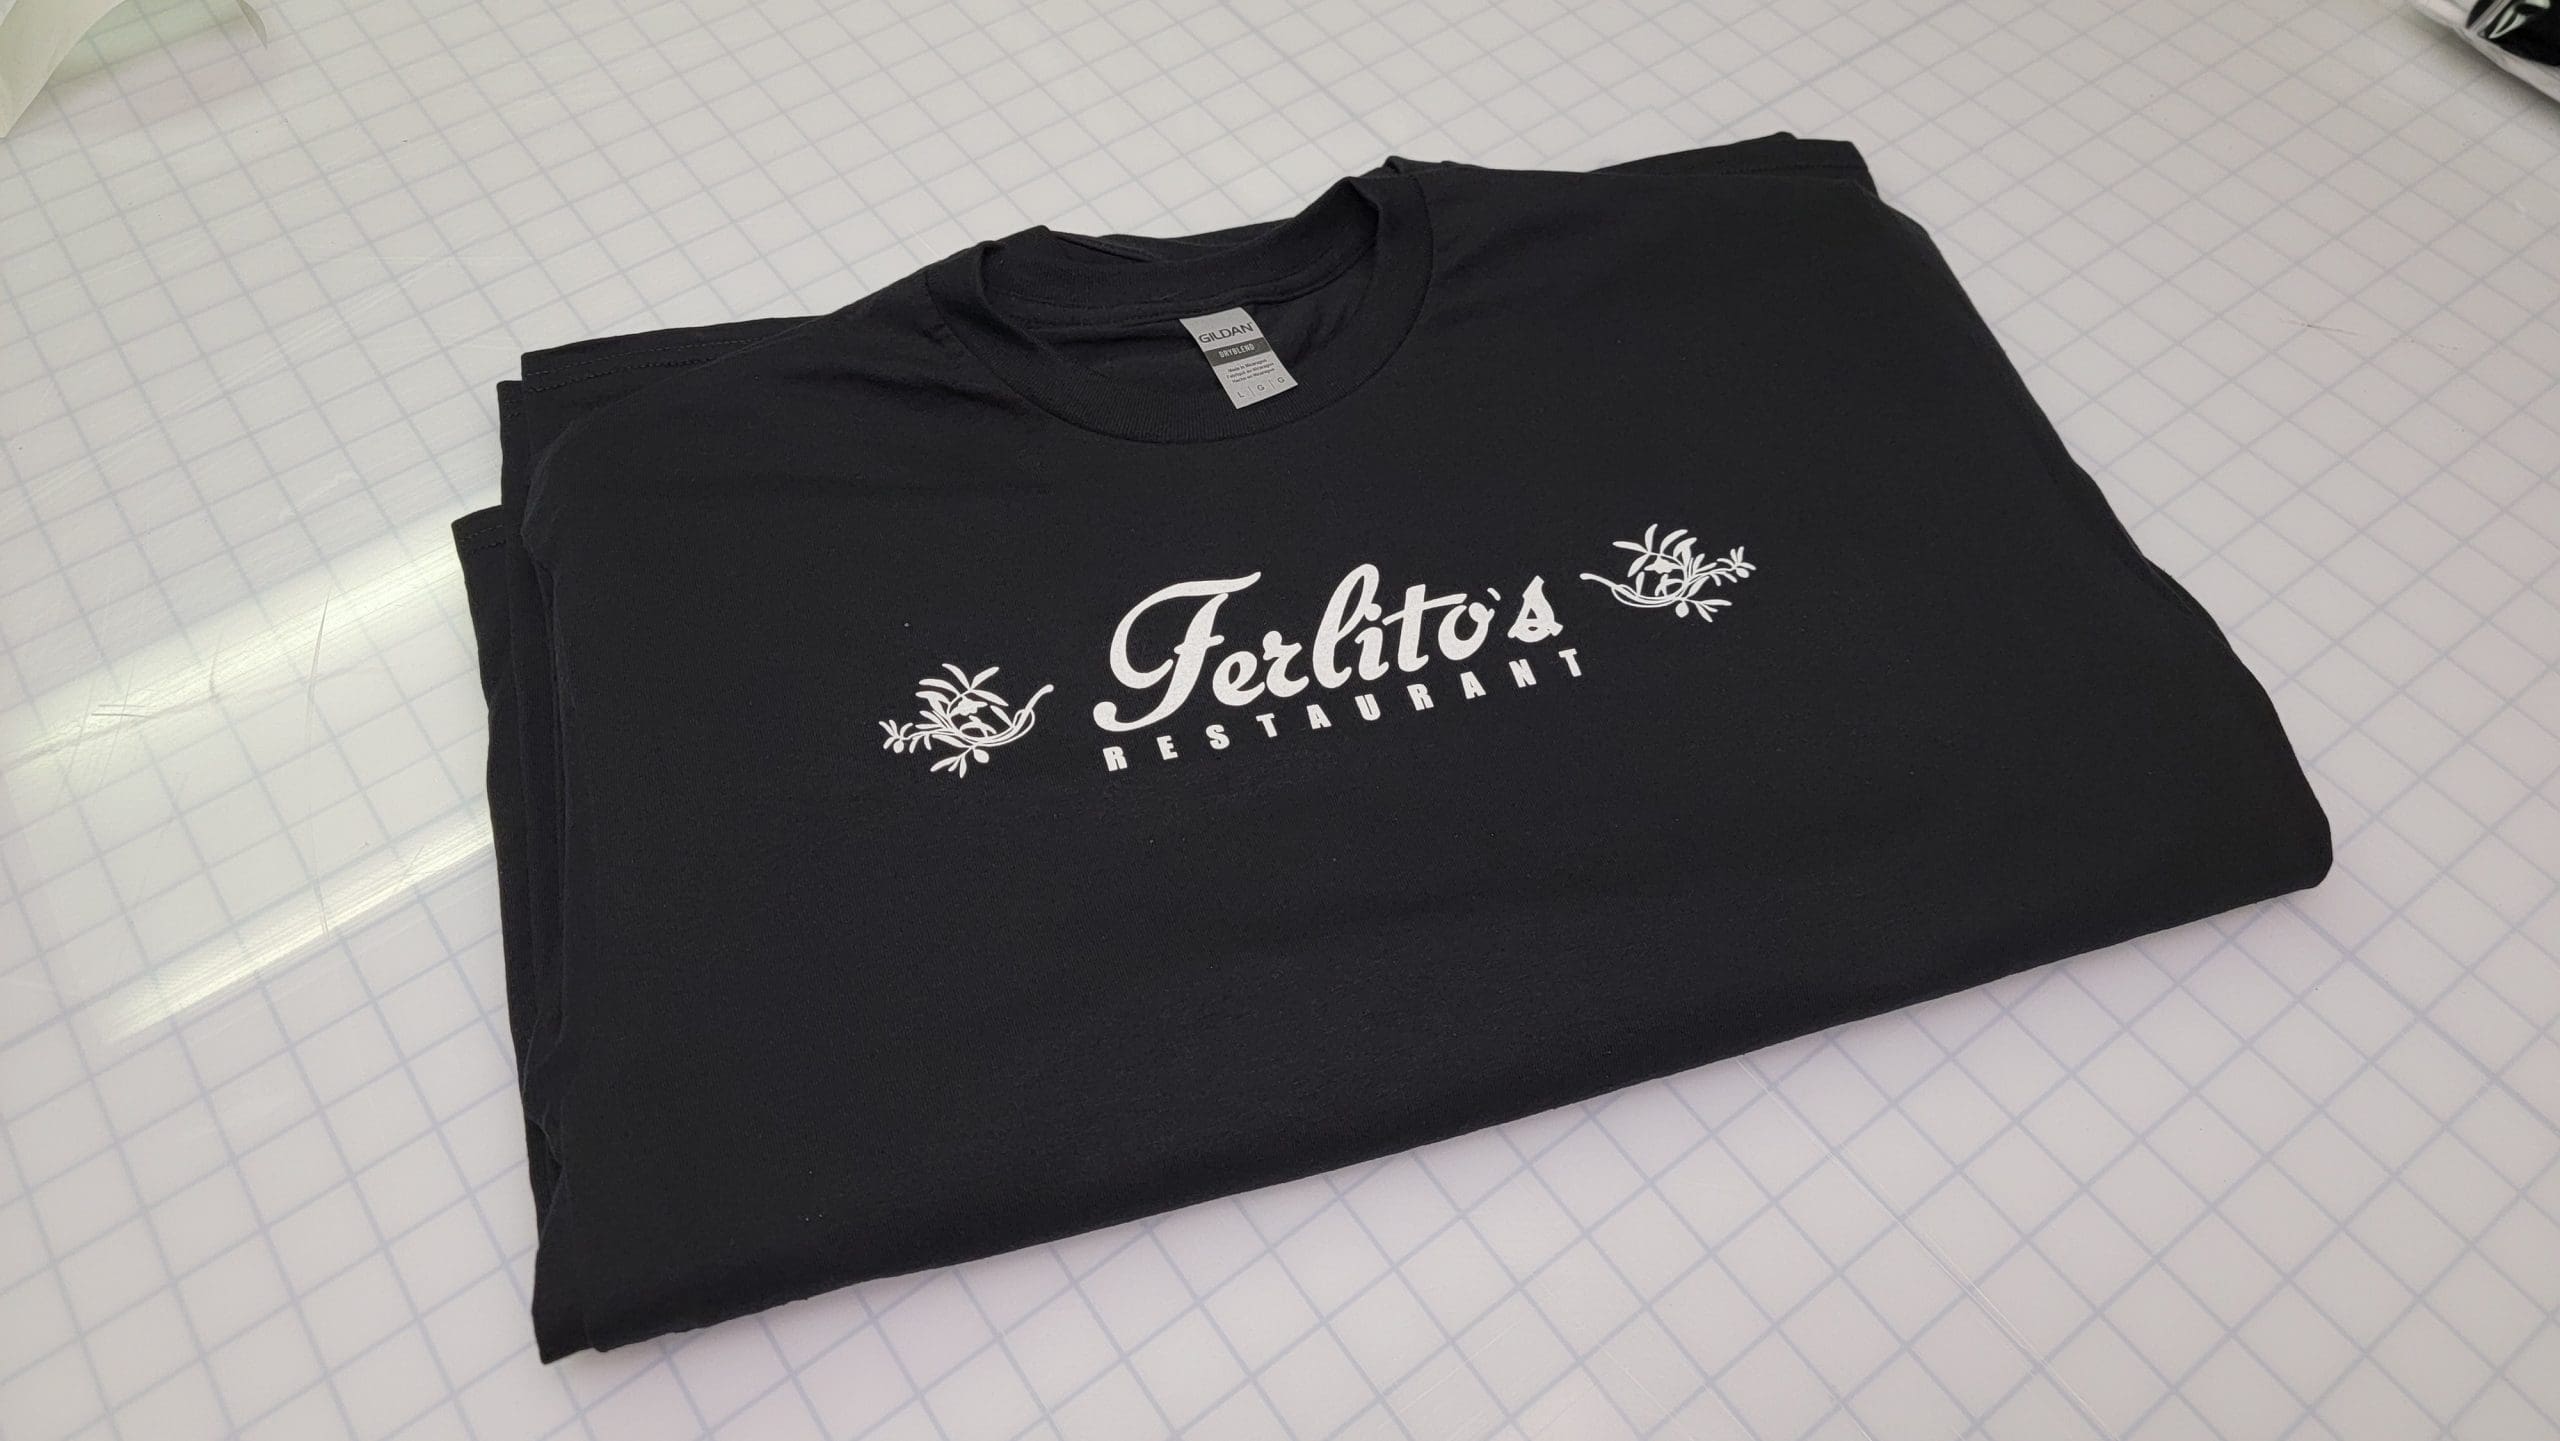 Ferlito’s – Staff Shirts